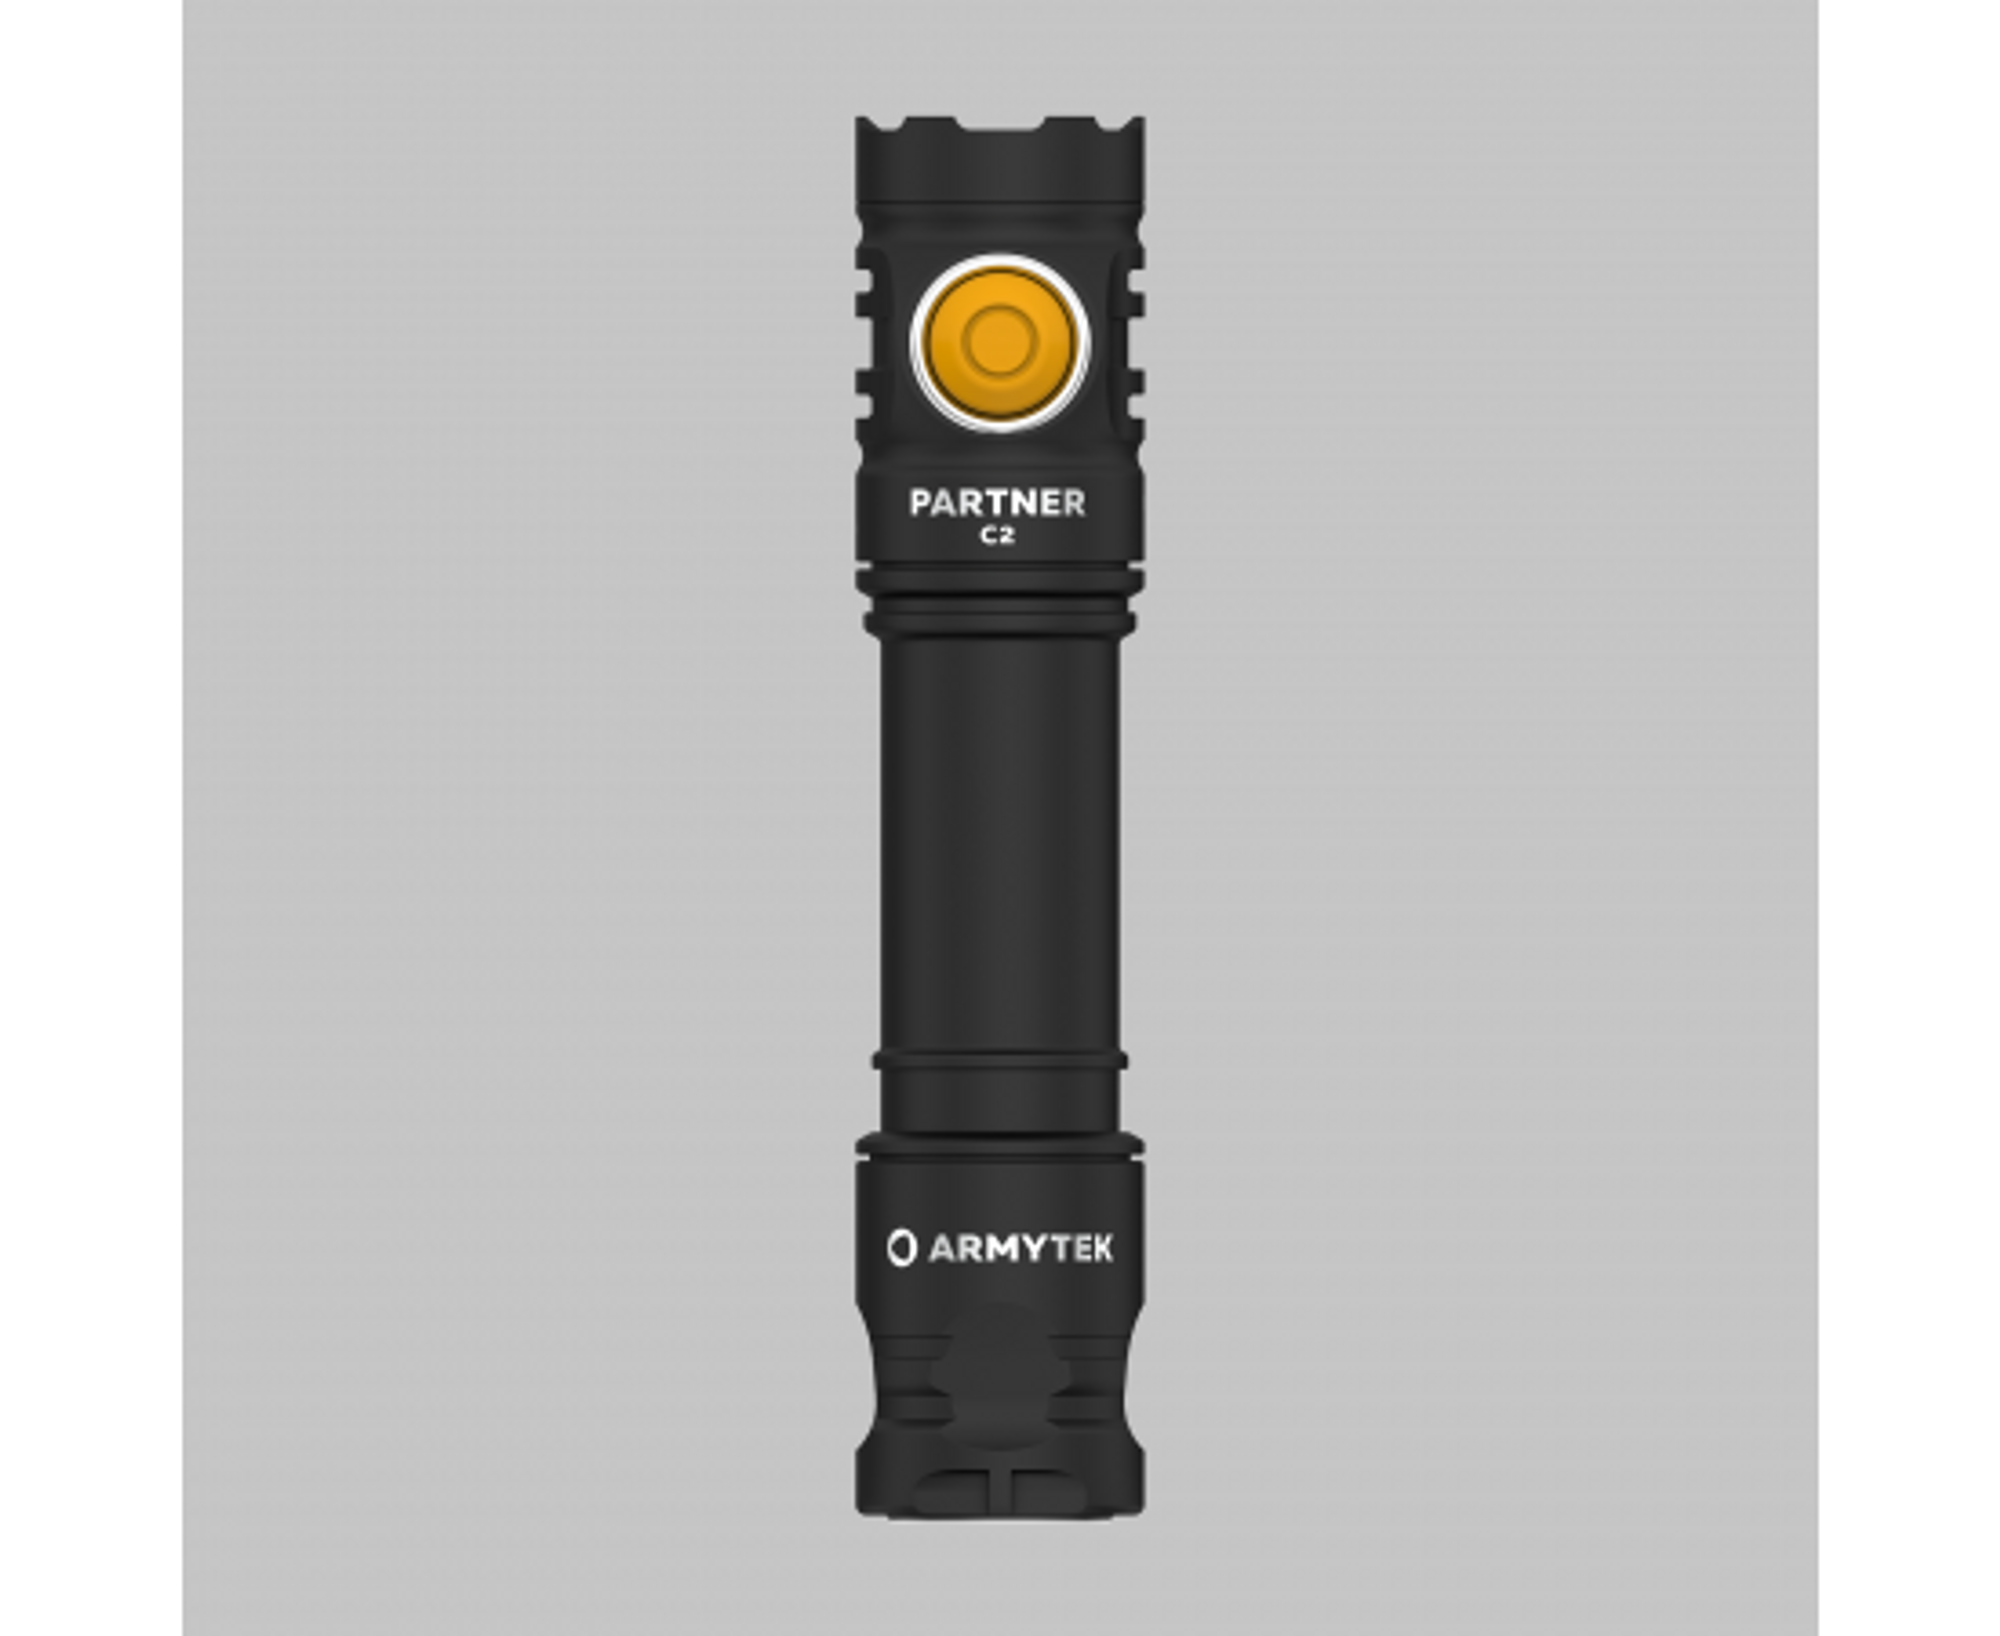 Armytek Partner C2 Magnet USB Warm